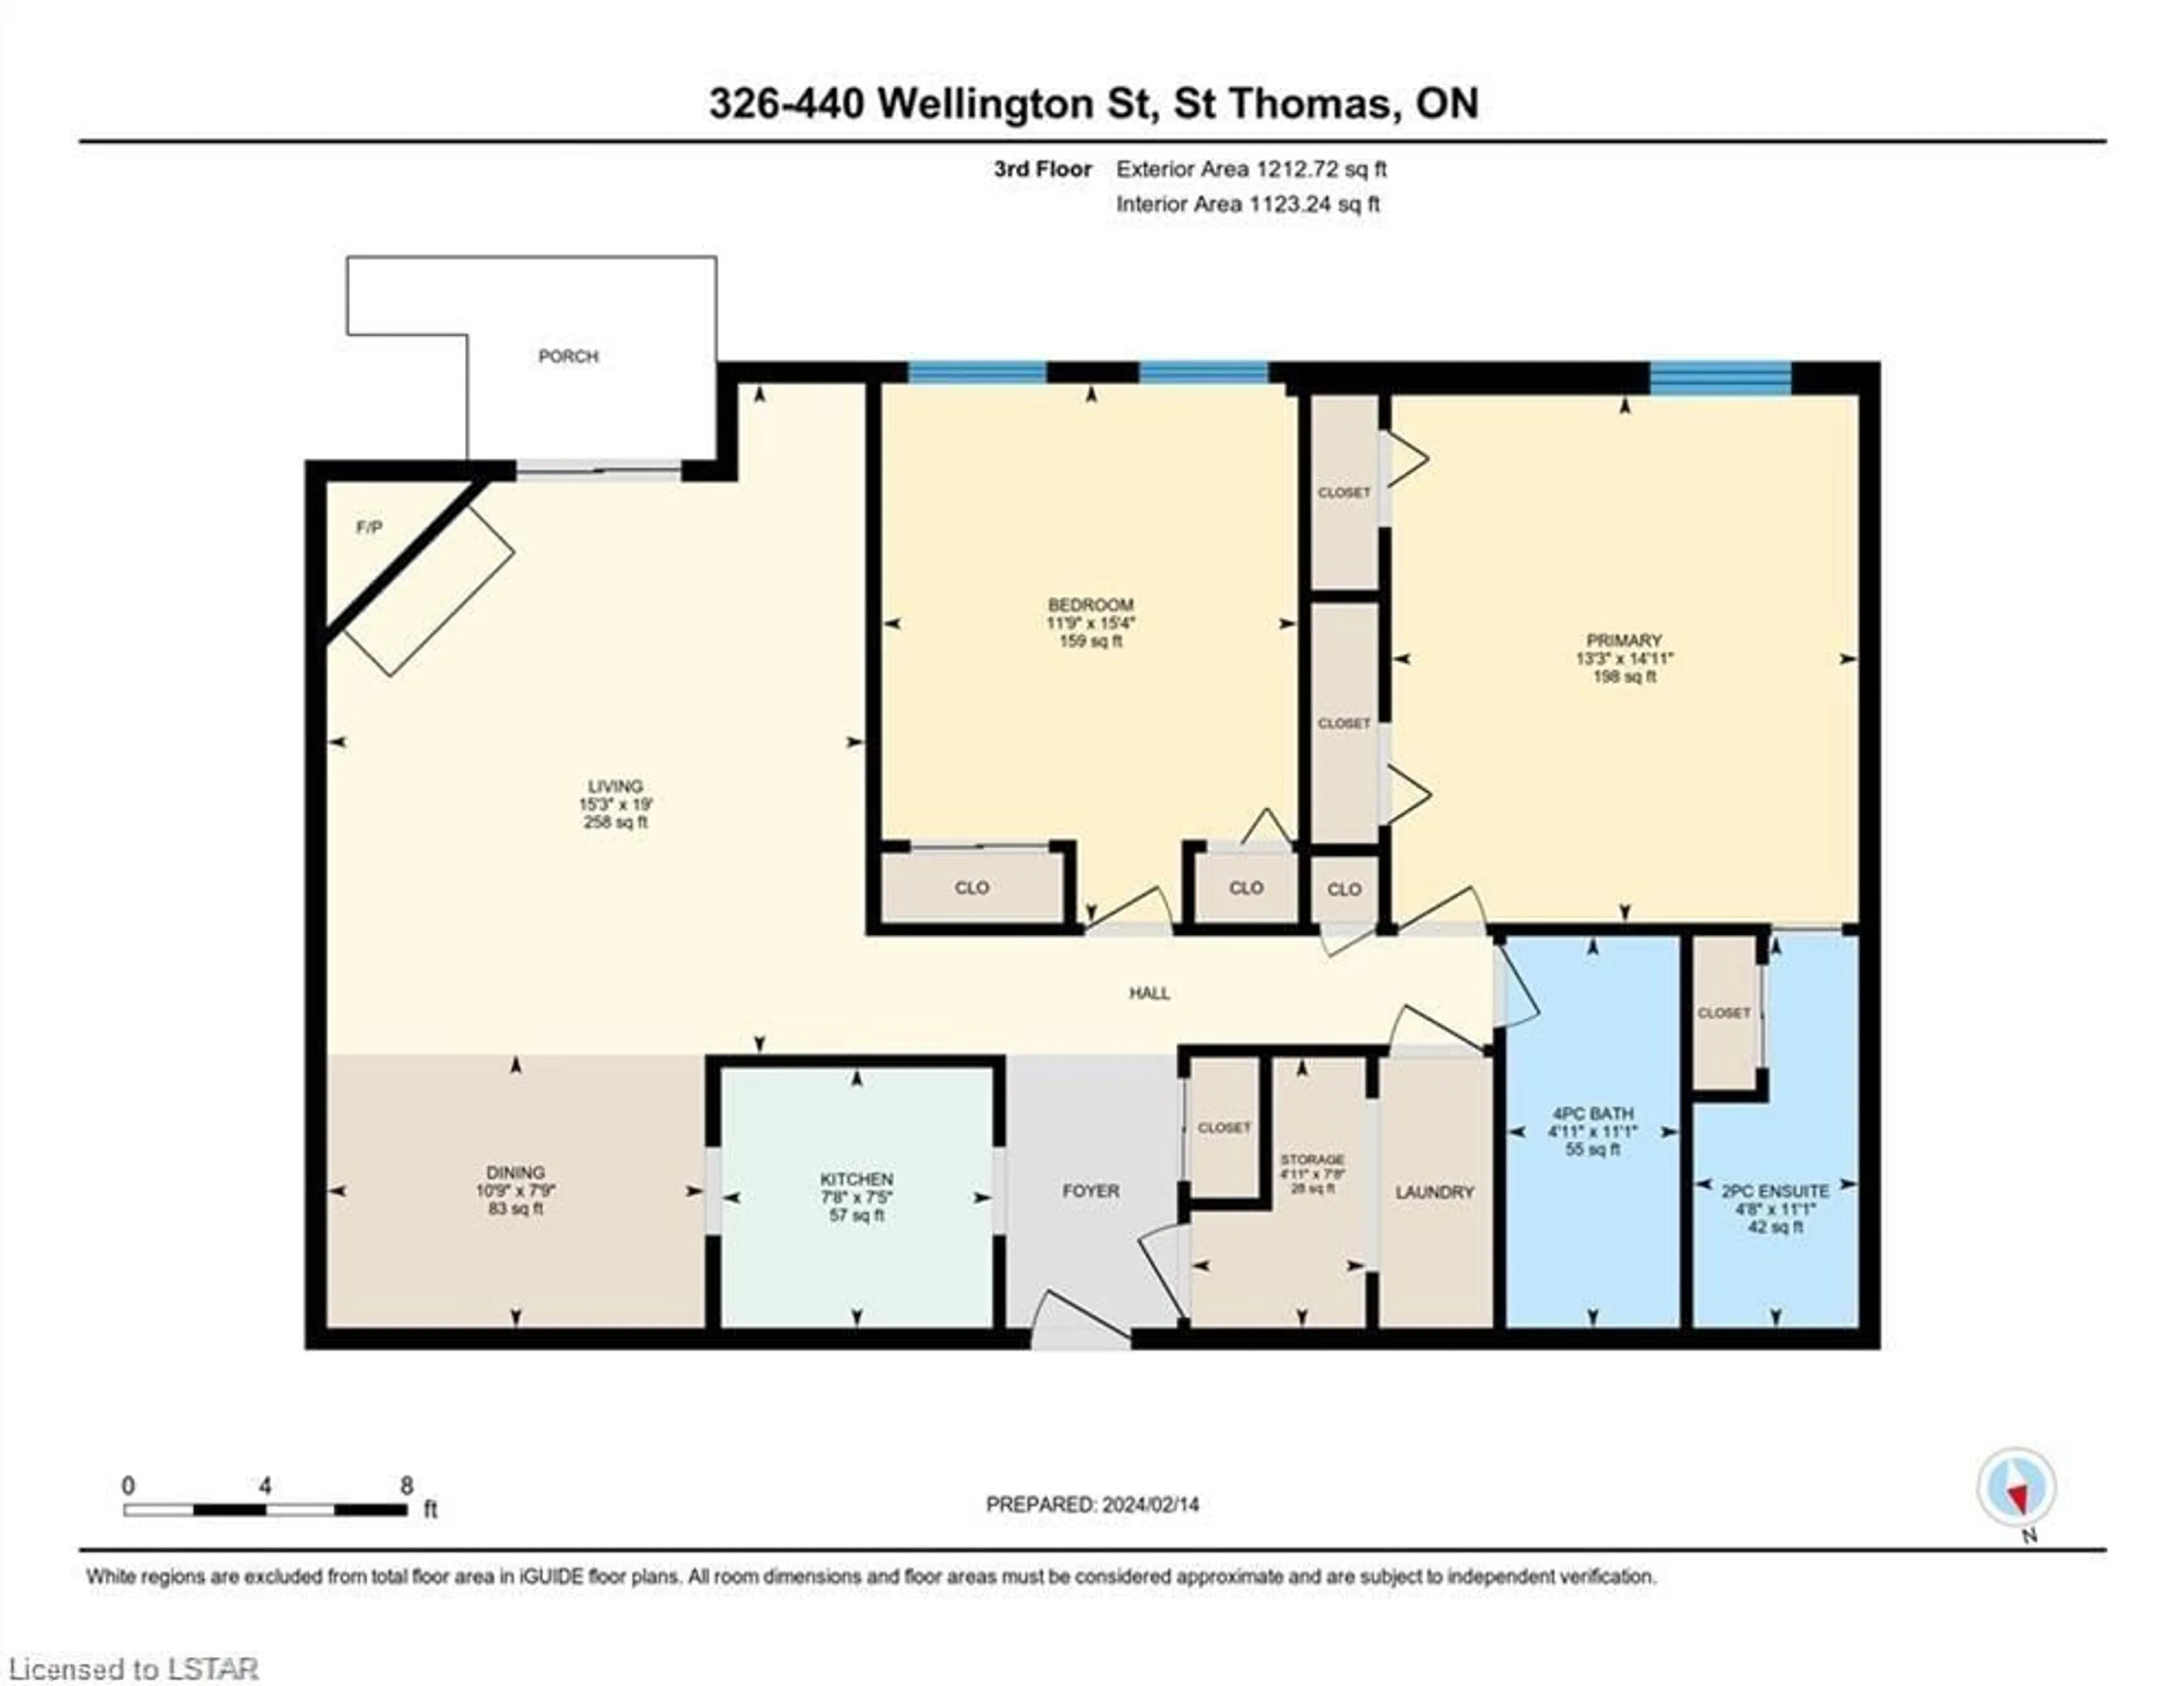 Floor plan for 440 Wellington St #326, St. Thomas Ontario N5R 5X5